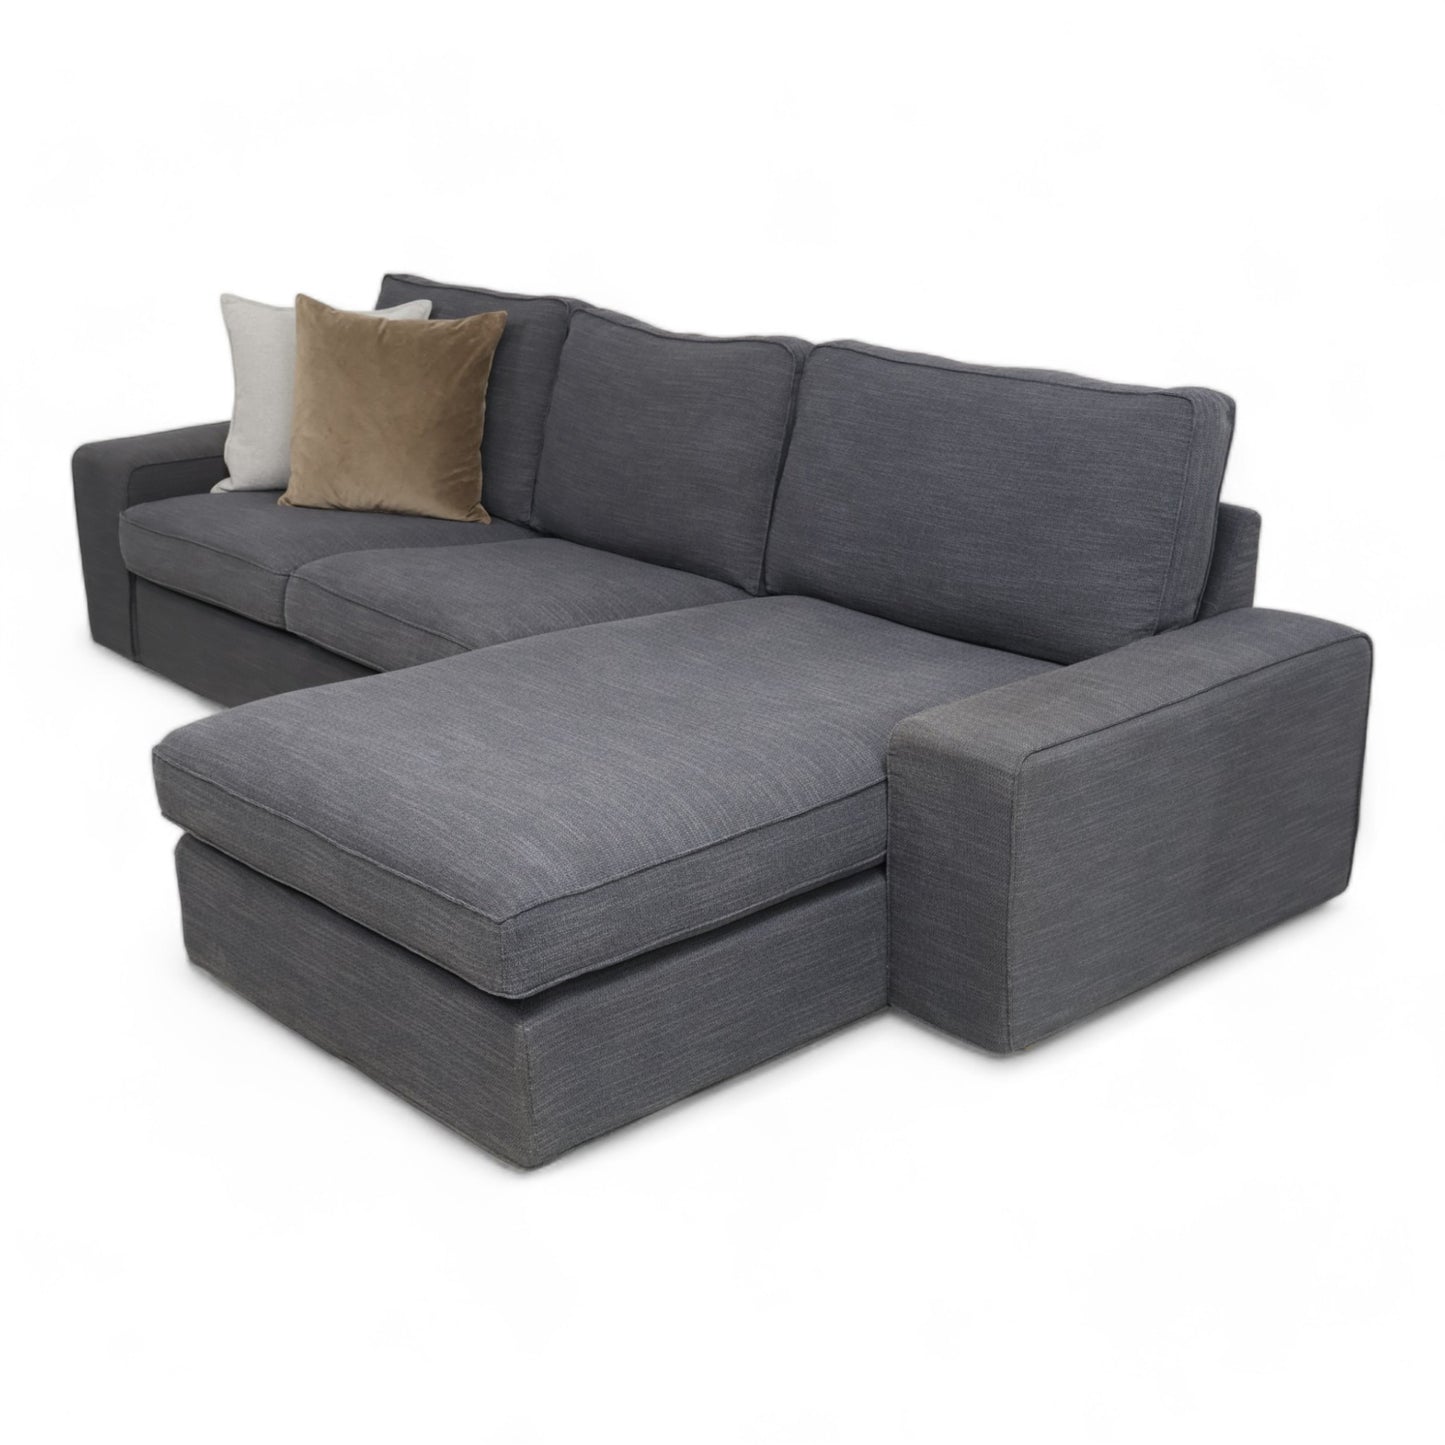 Nyrenset | Mørk grå IKEA Kivik sofa med vendbar sjeselong